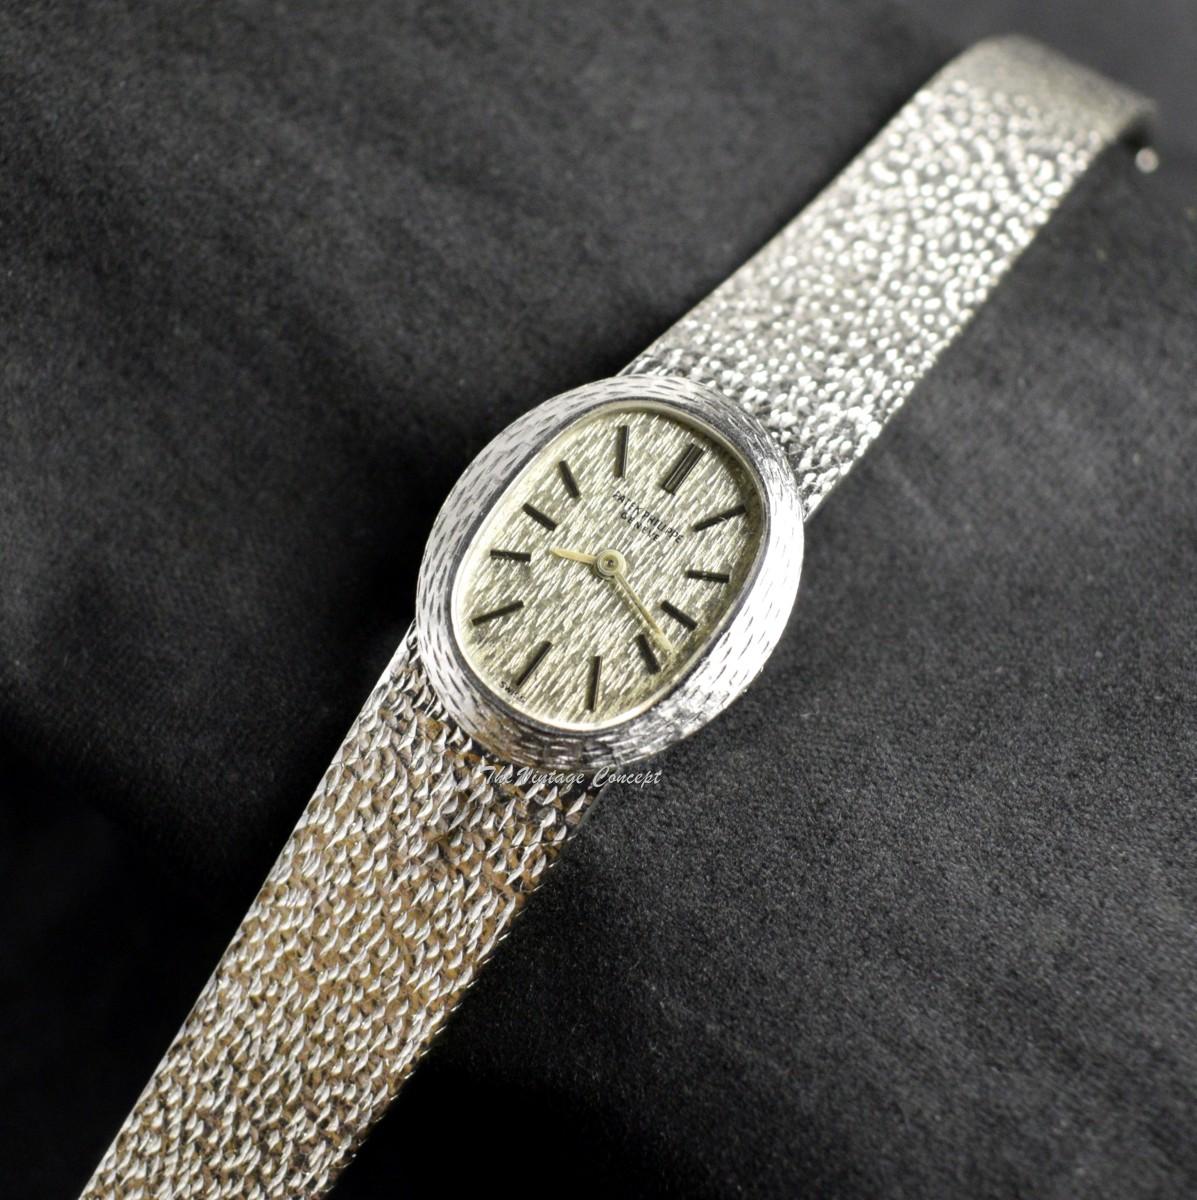 Patek Philippe Lady 18K White Gold Ellipse 4111/1 Manual Wind Watch (SOLD)